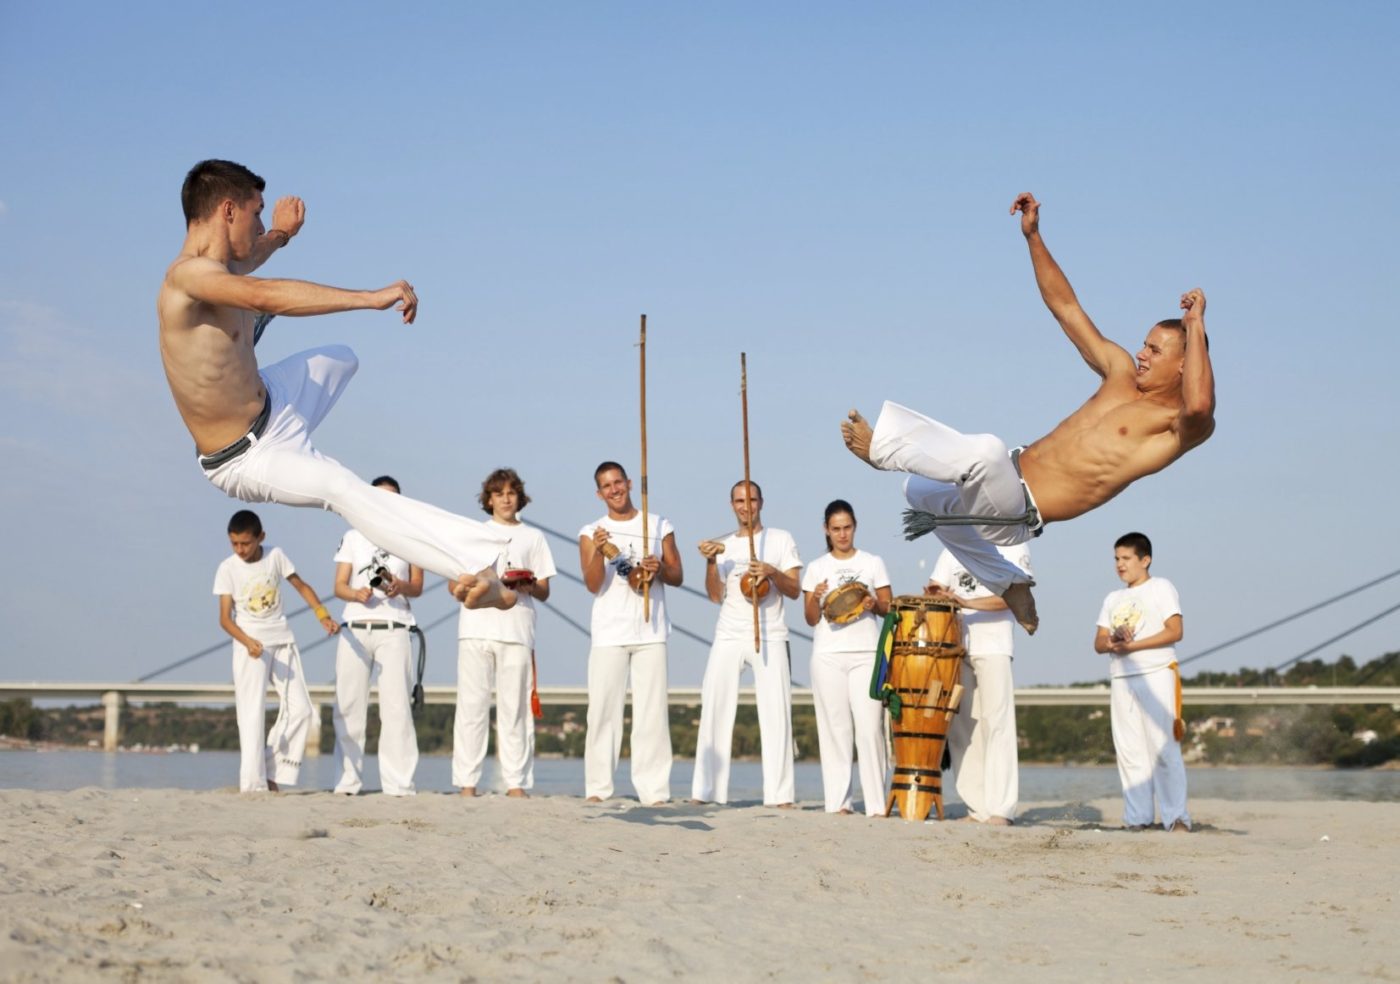 The Dancing Martial Art of Capoeira